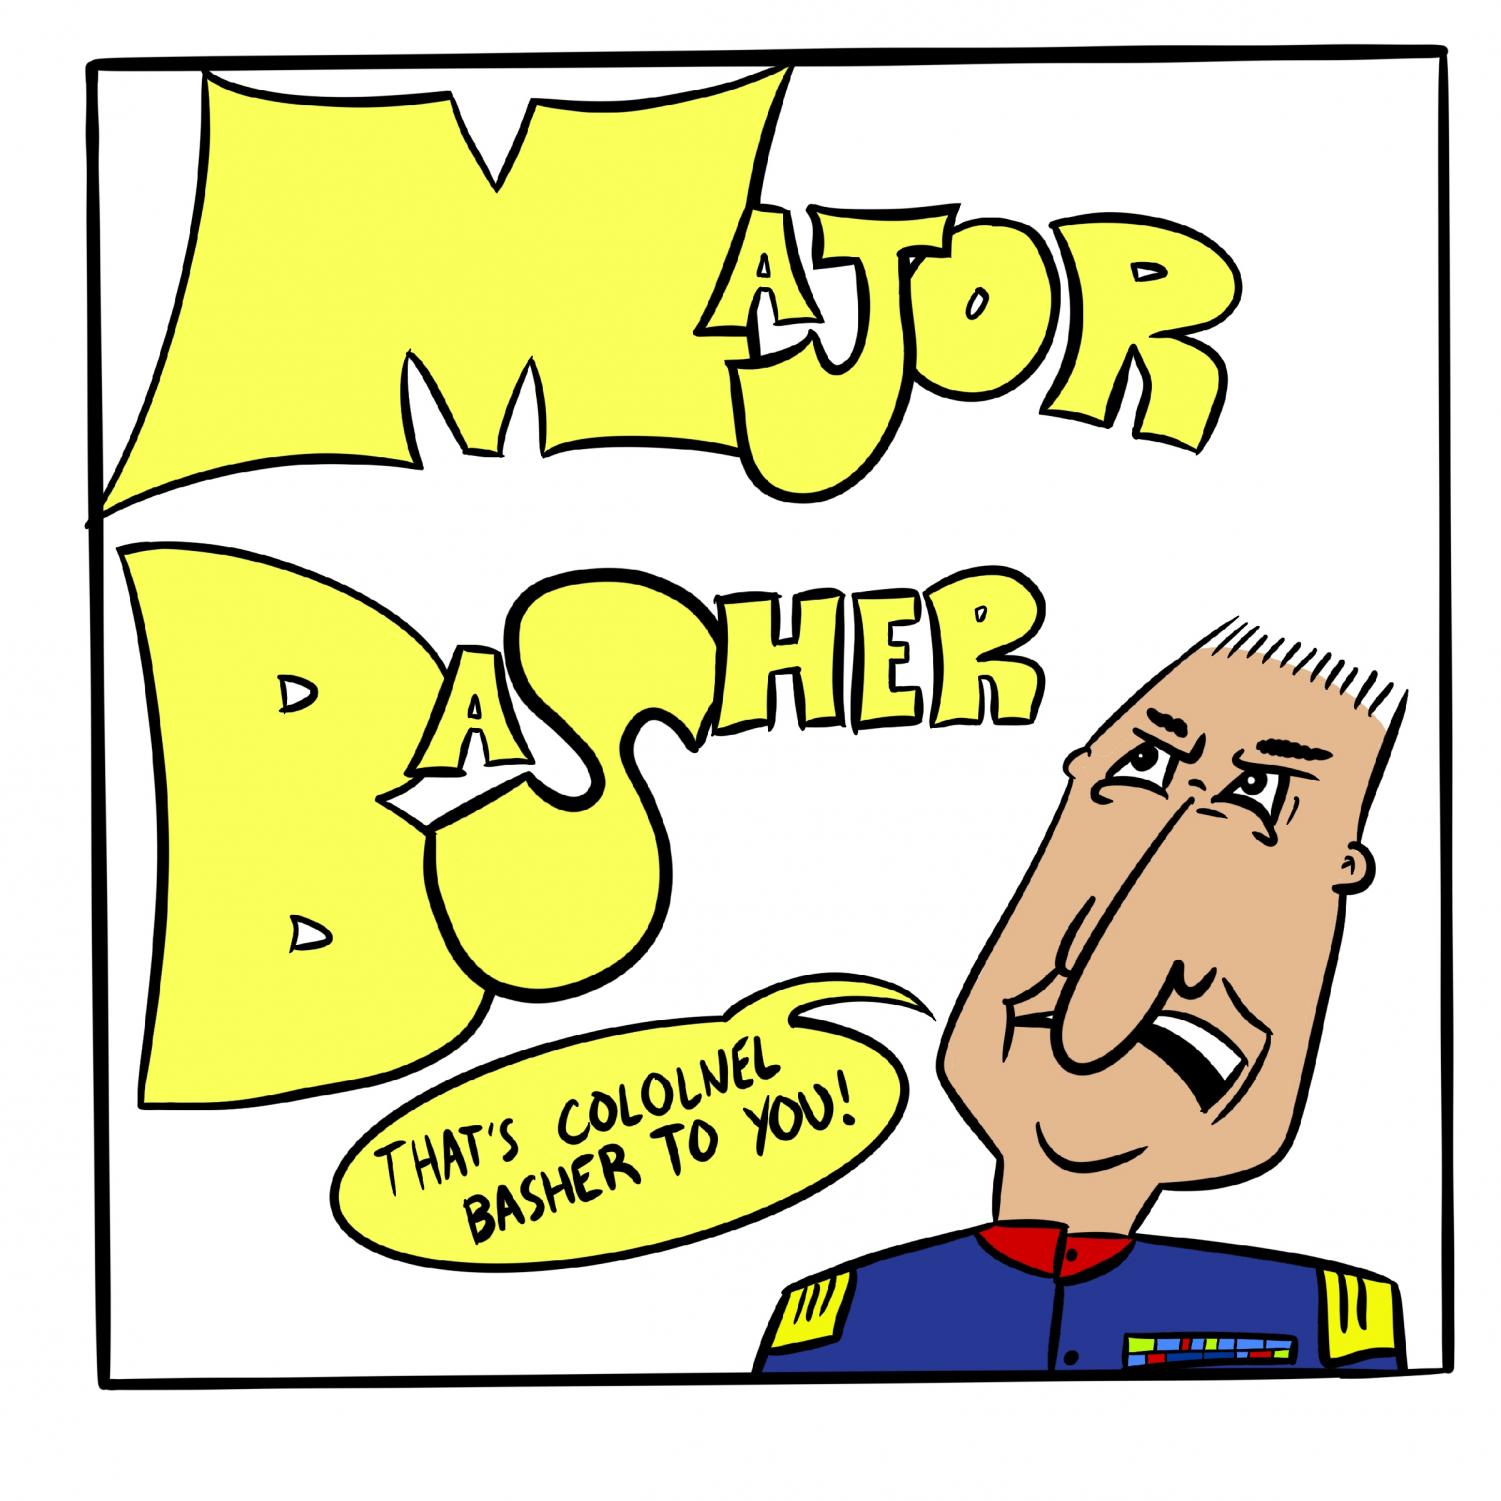 Major+Basher+comic